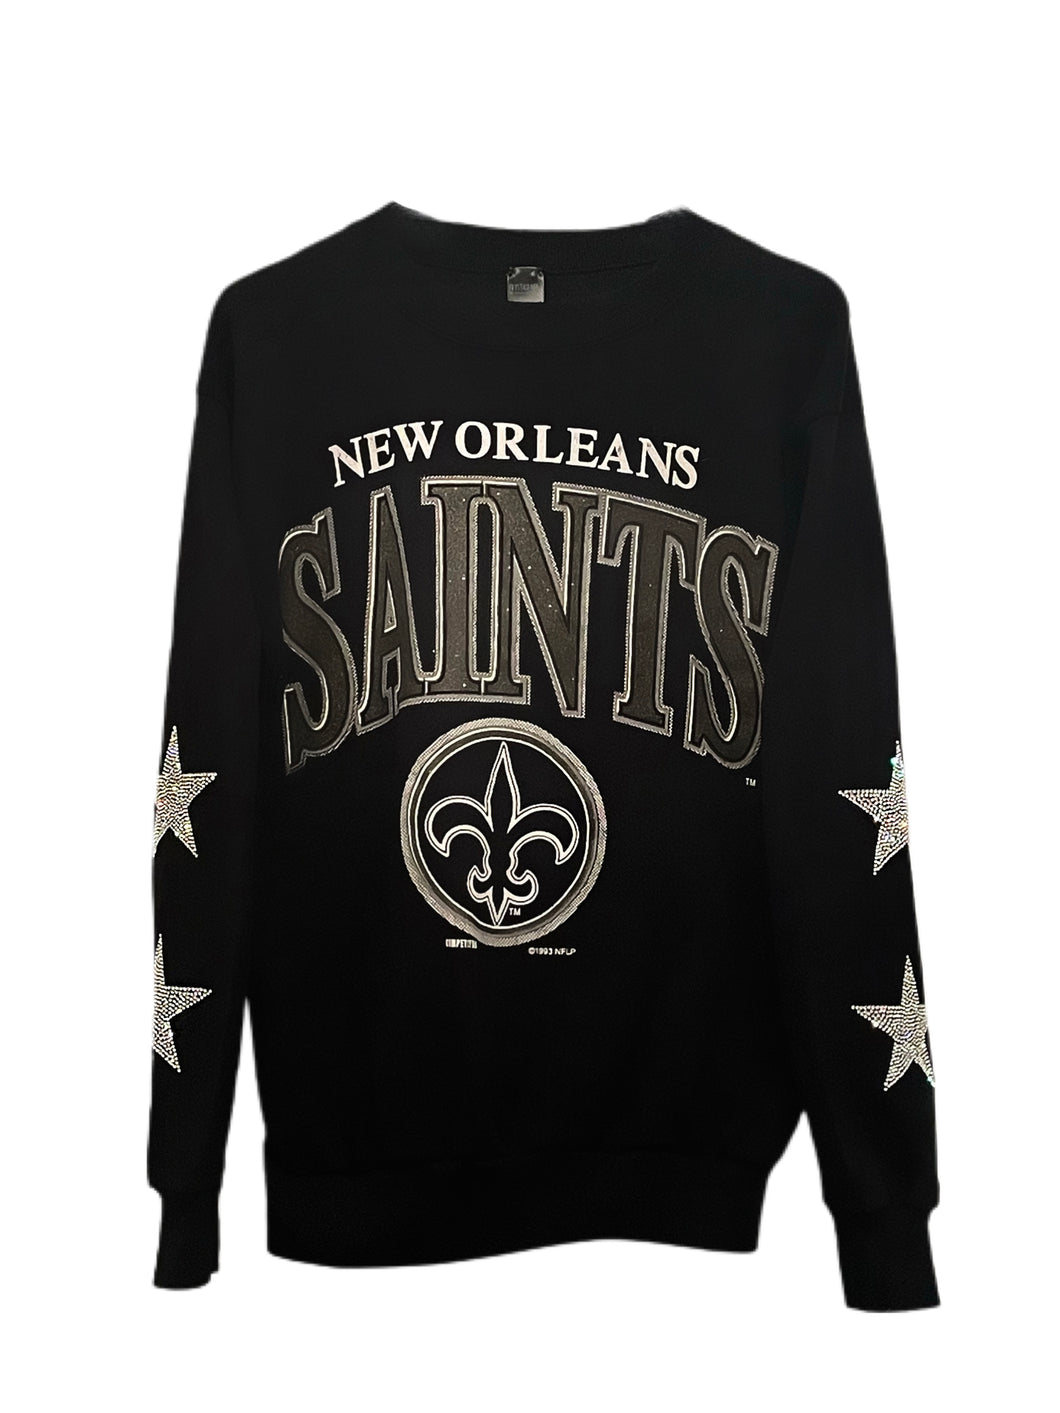 New Orleans Saints, NFL One of a KIND Vintage Sweatshirt with Crystal Star Design